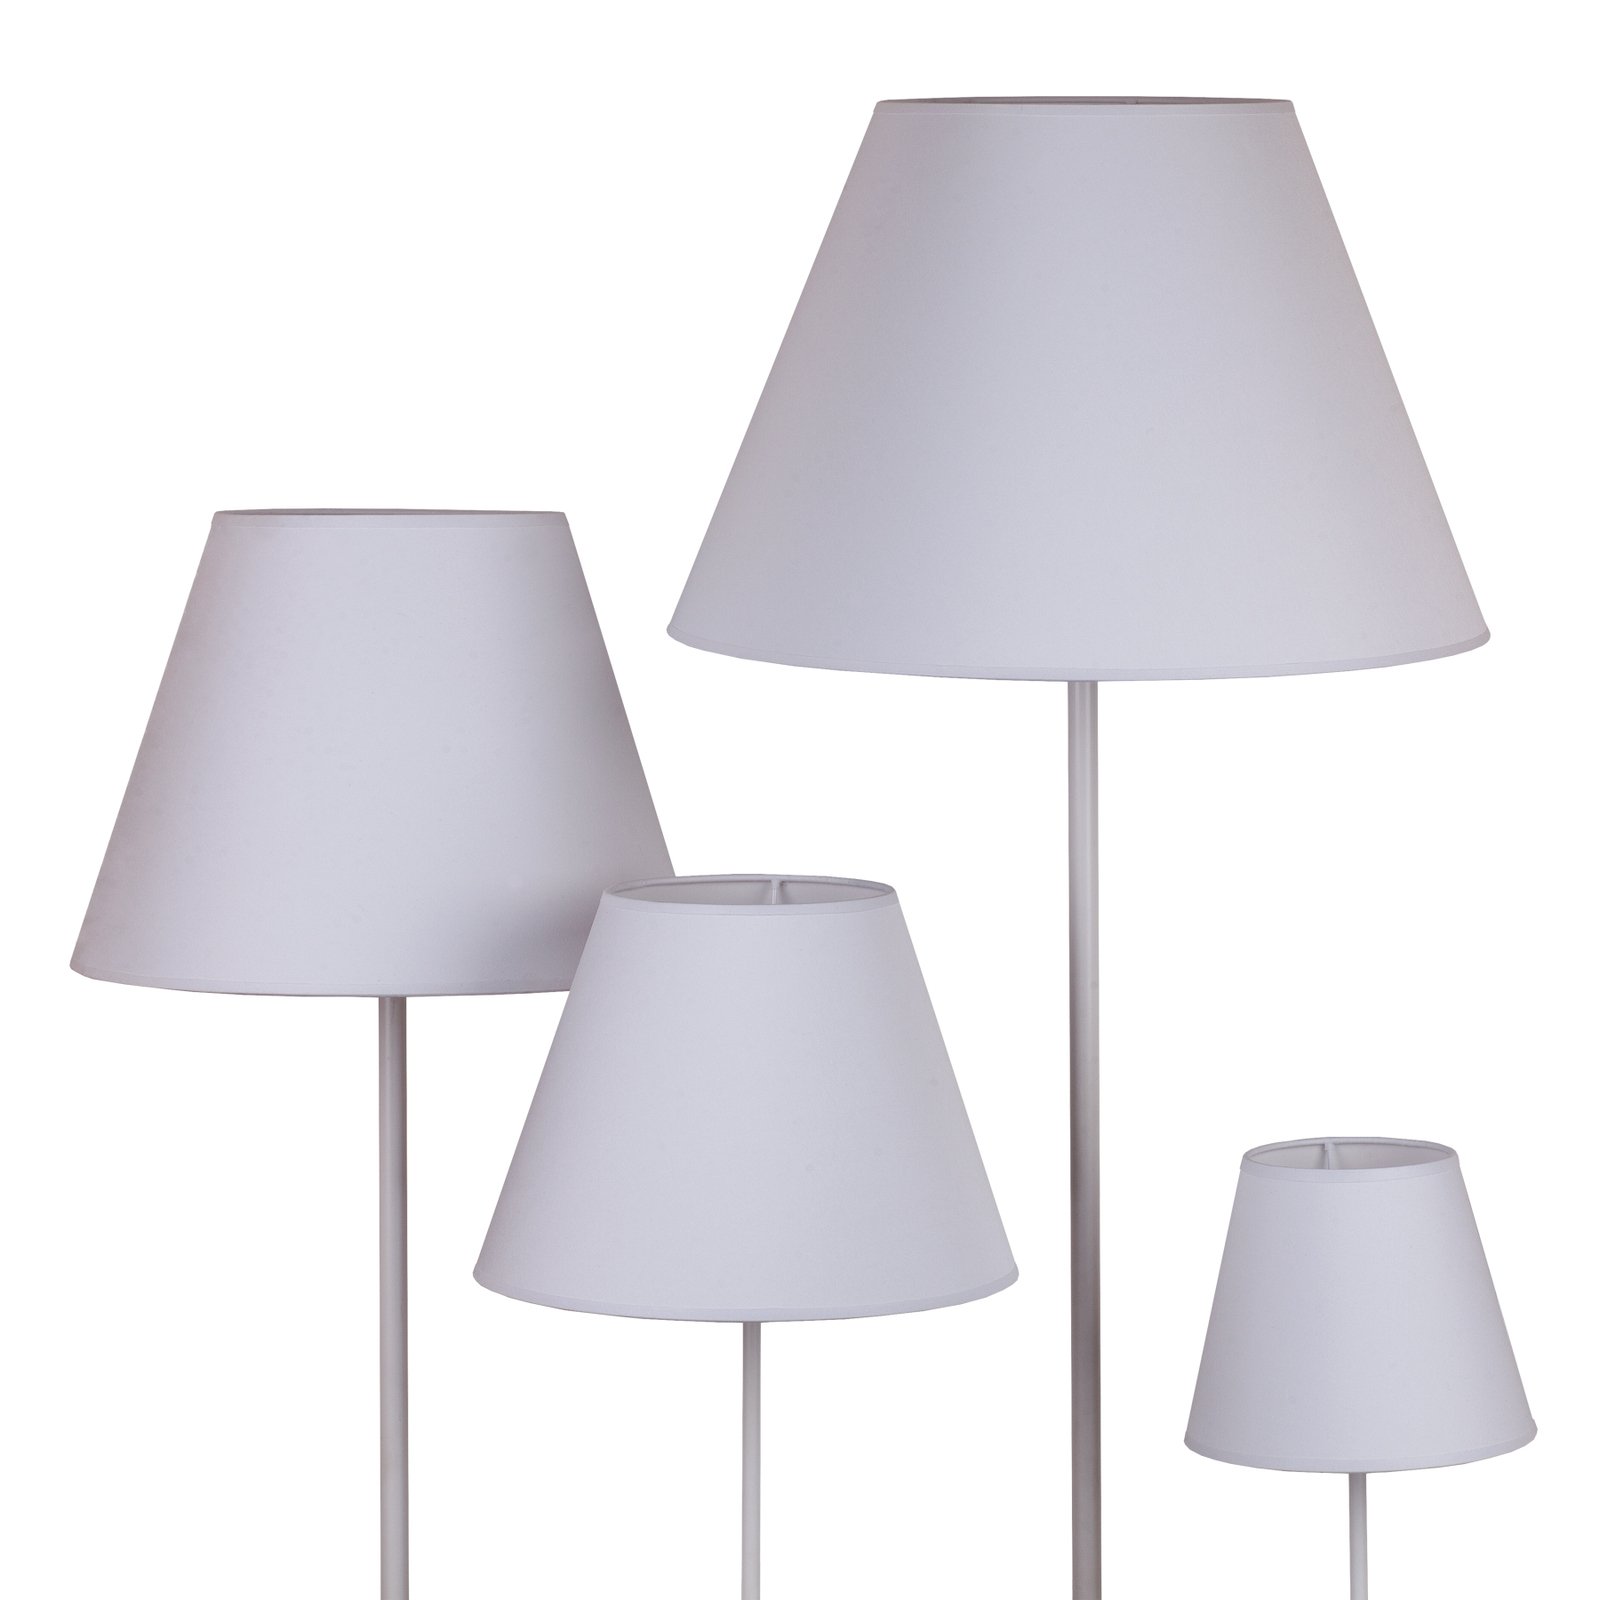 Sofia lampshade height 31 cm, white